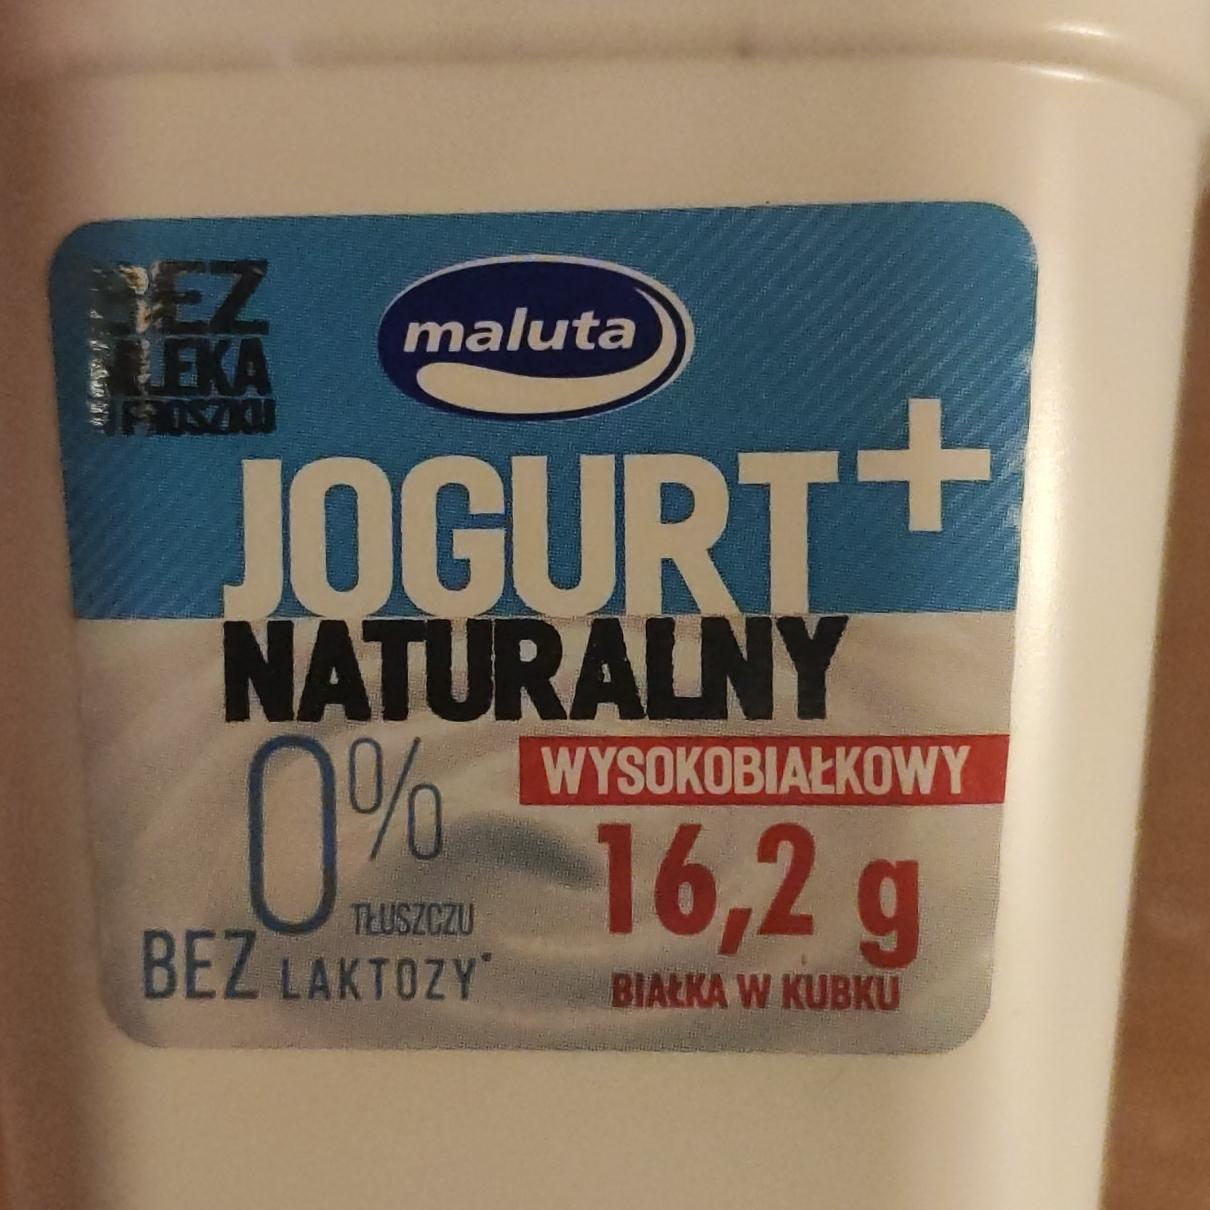 Фото - Йогурт натуральний 0% безлактозний Naturalny Jogurt Maluta